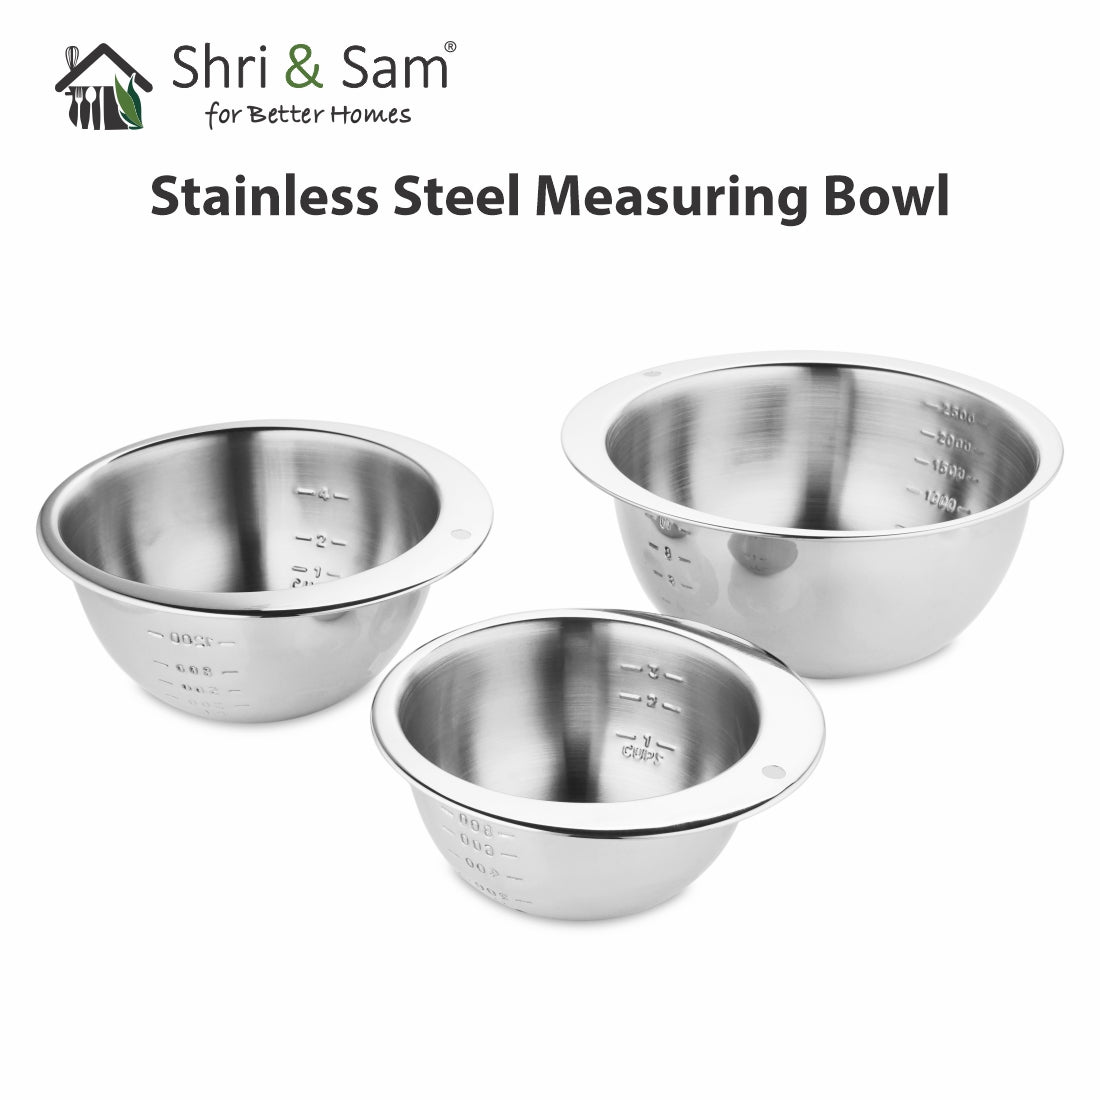 Stainless Steel Measuring Bowl